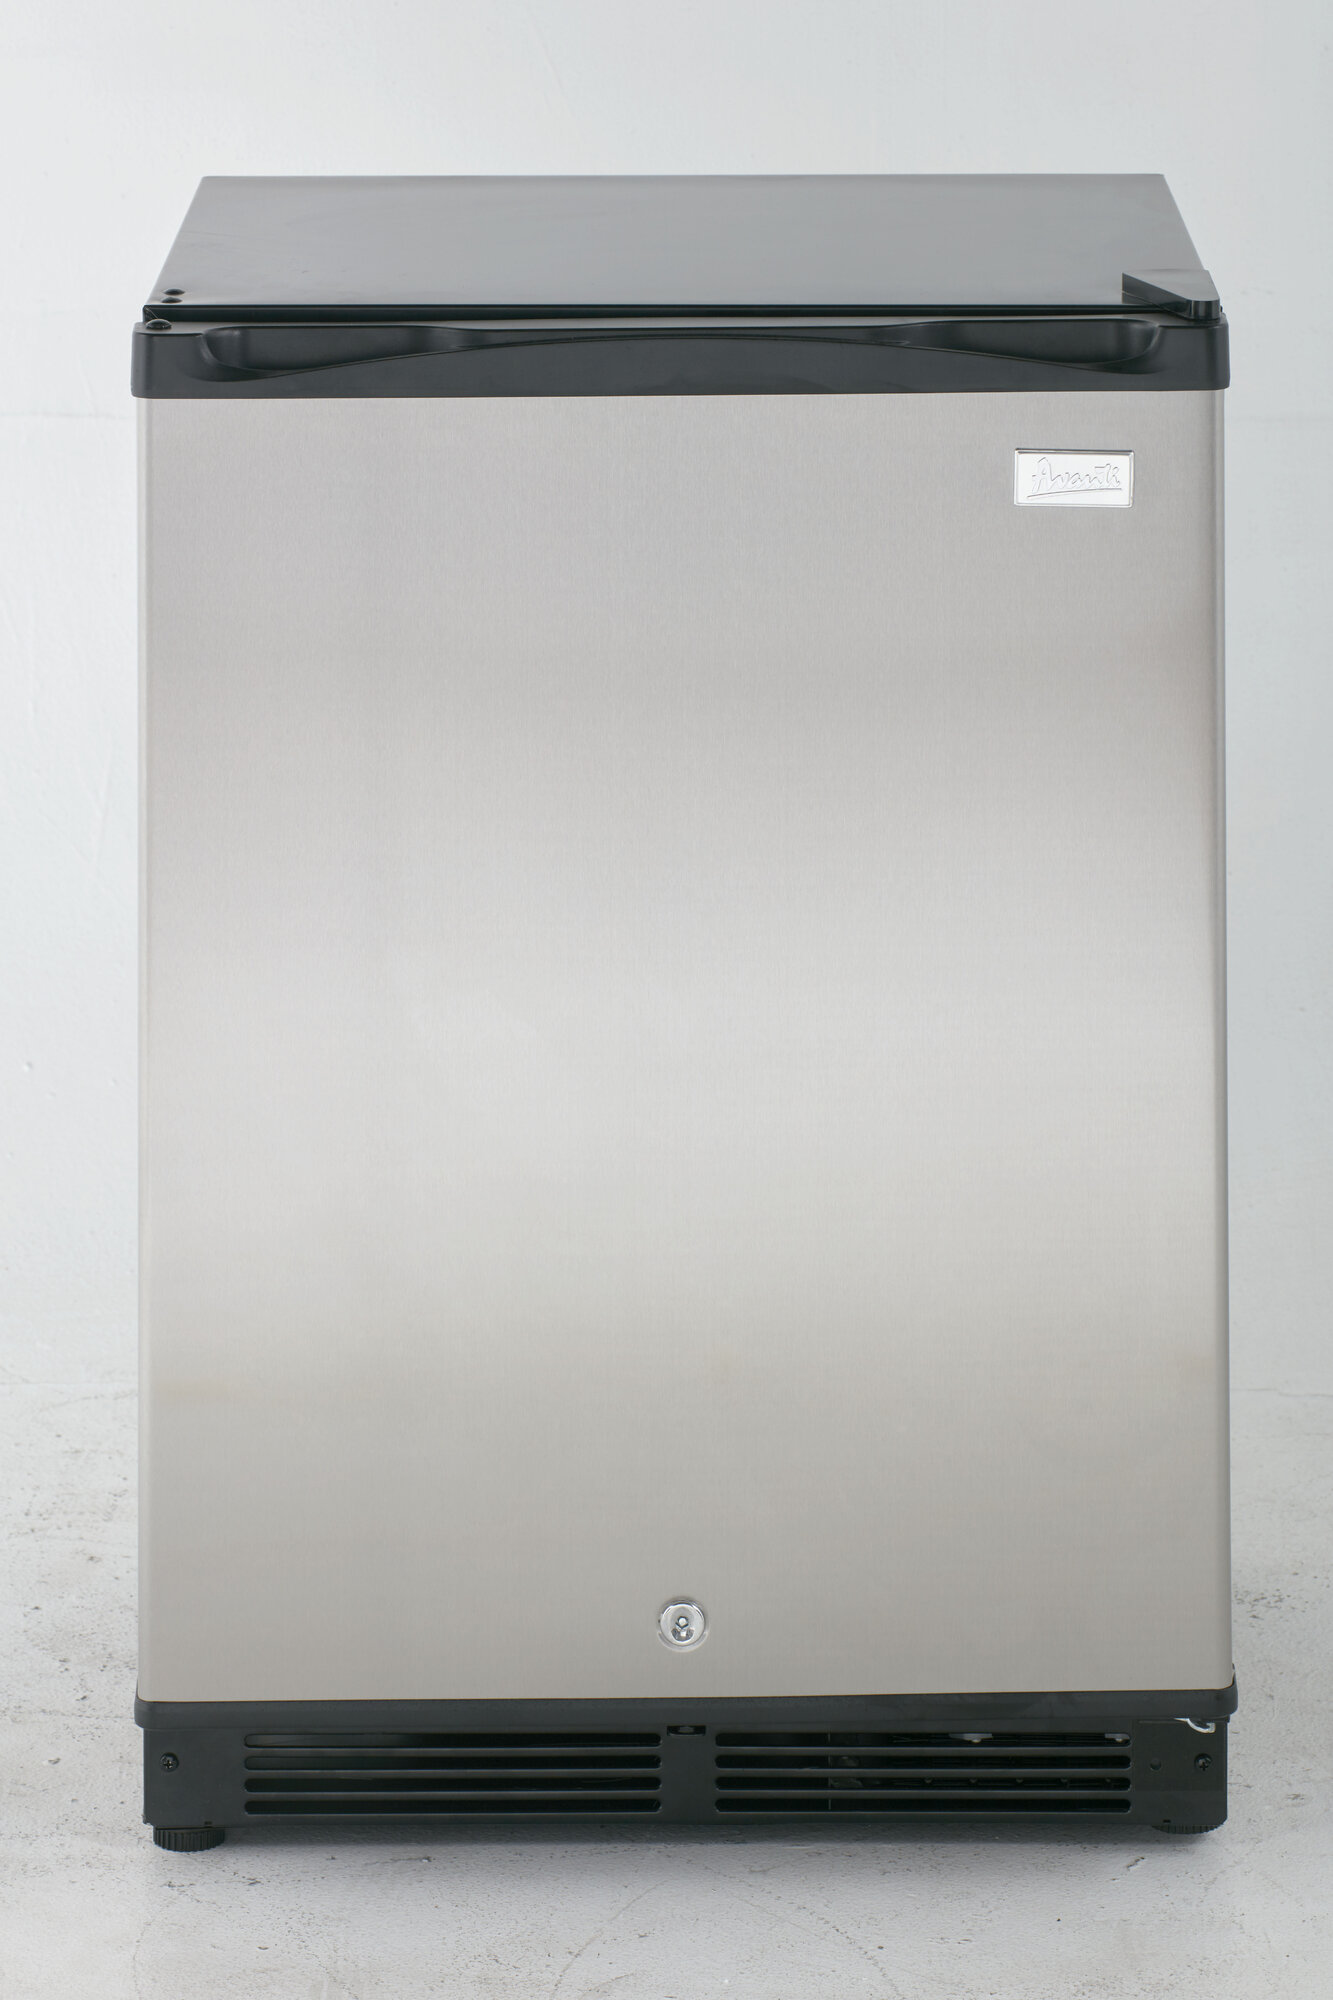 Avanti Products 5.2 cu. ft. Compact Refrigerator 79841191529 | eBay